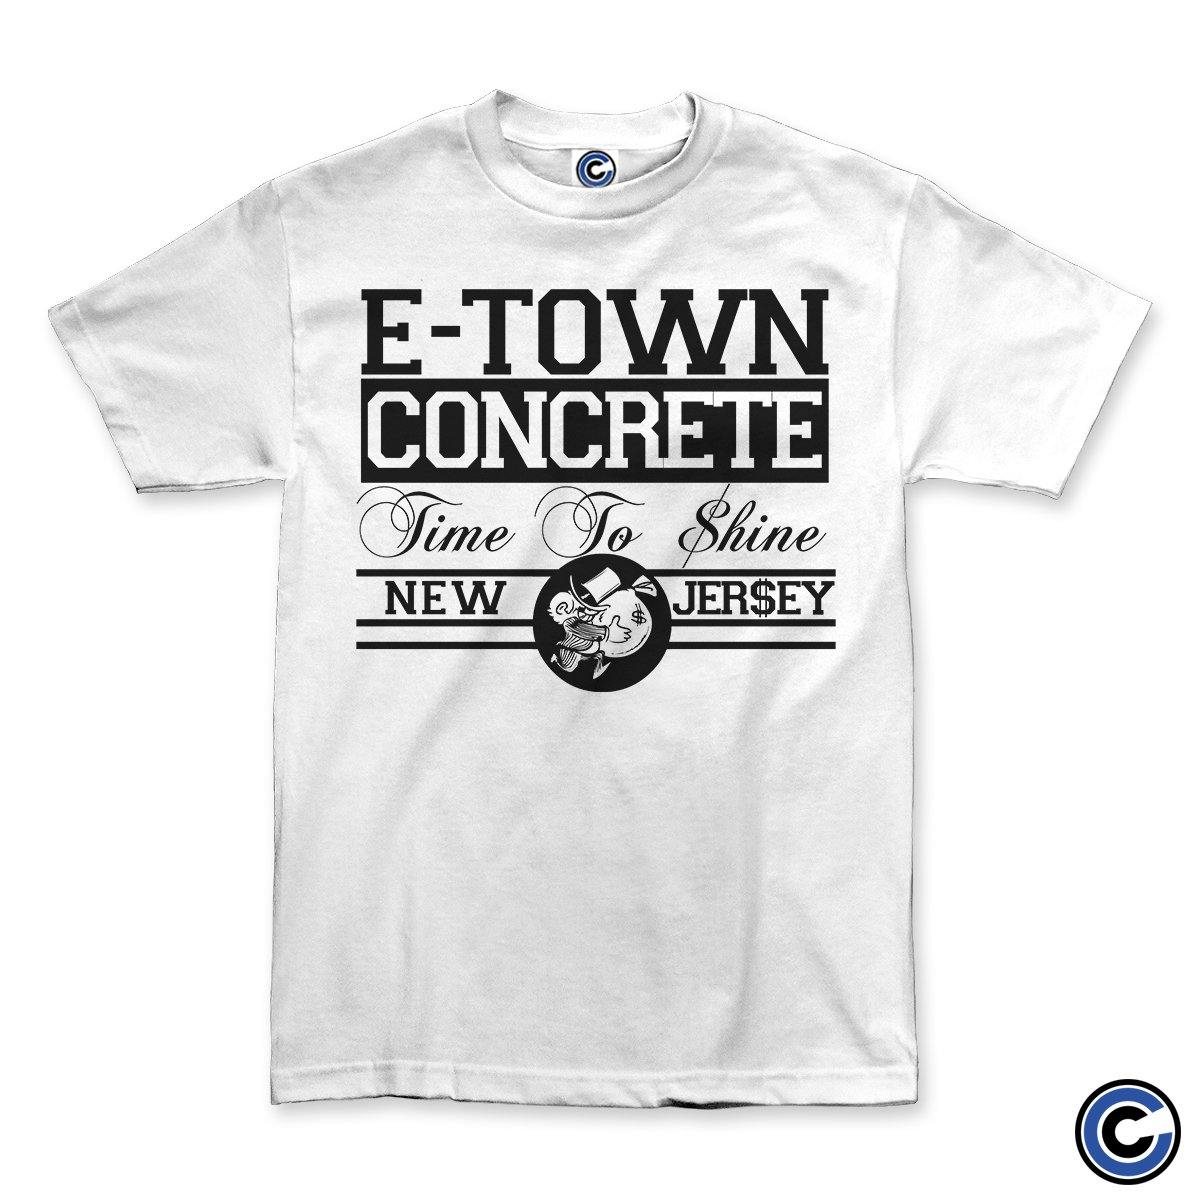 E. Town Concrete 